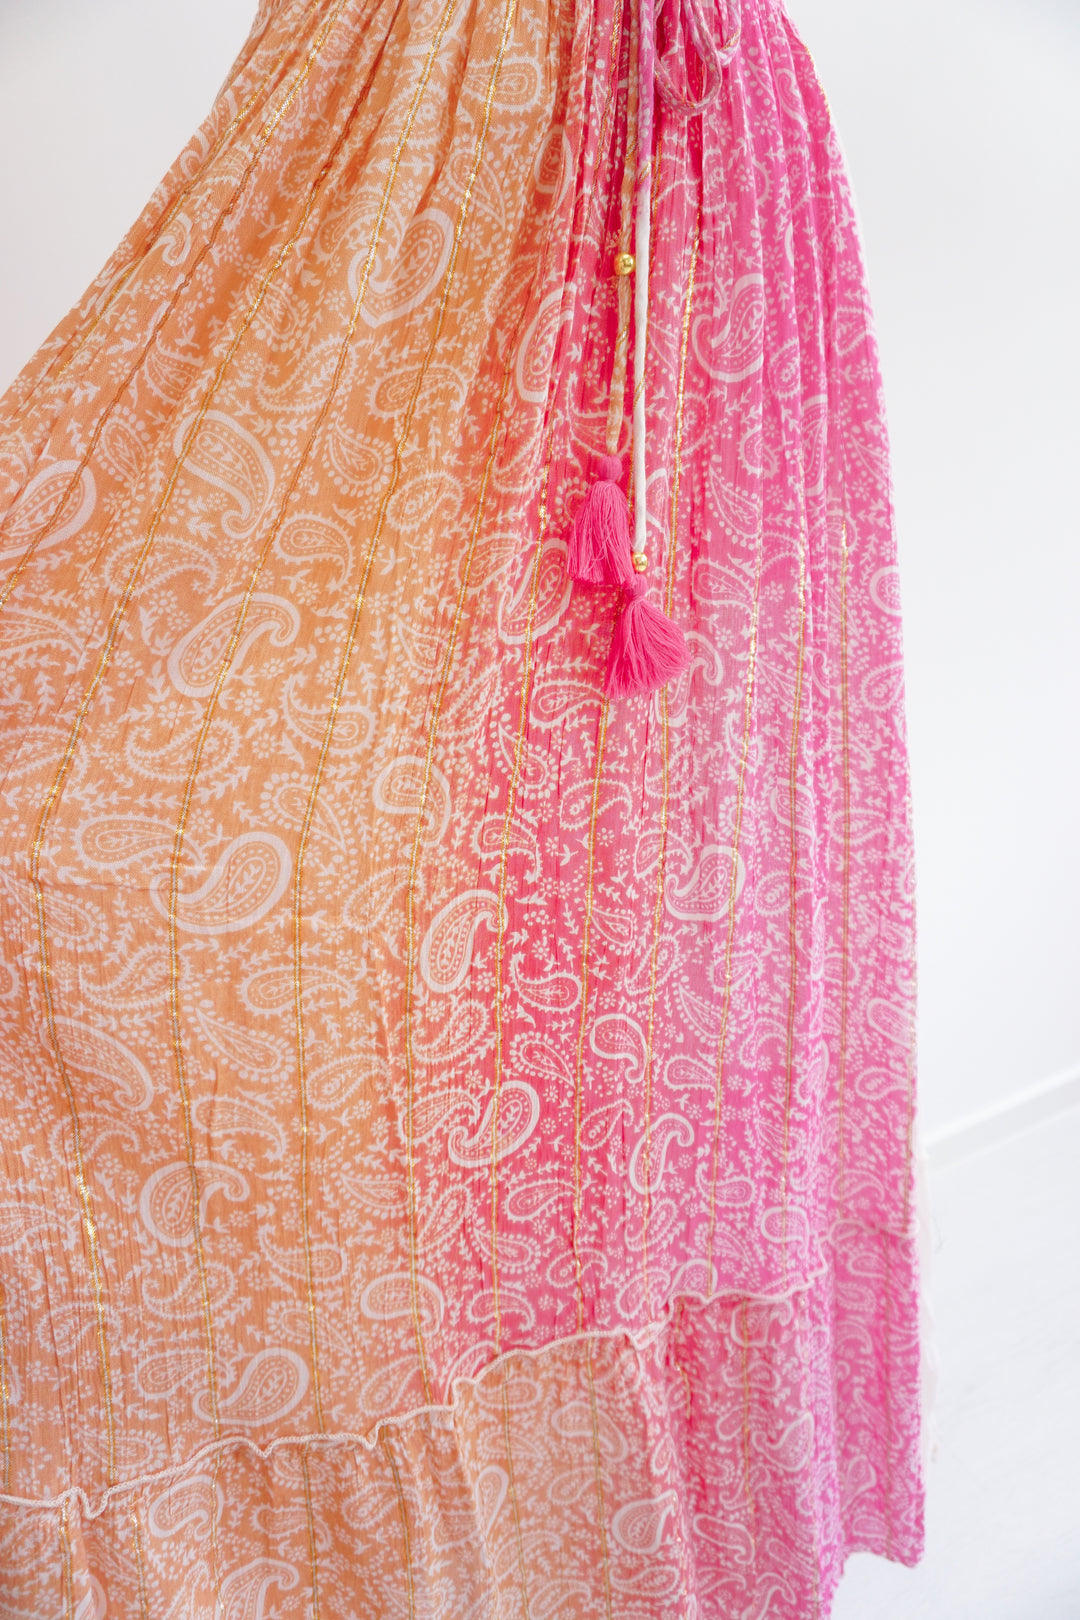 Verspieltes Kleid 11085 pink/orange